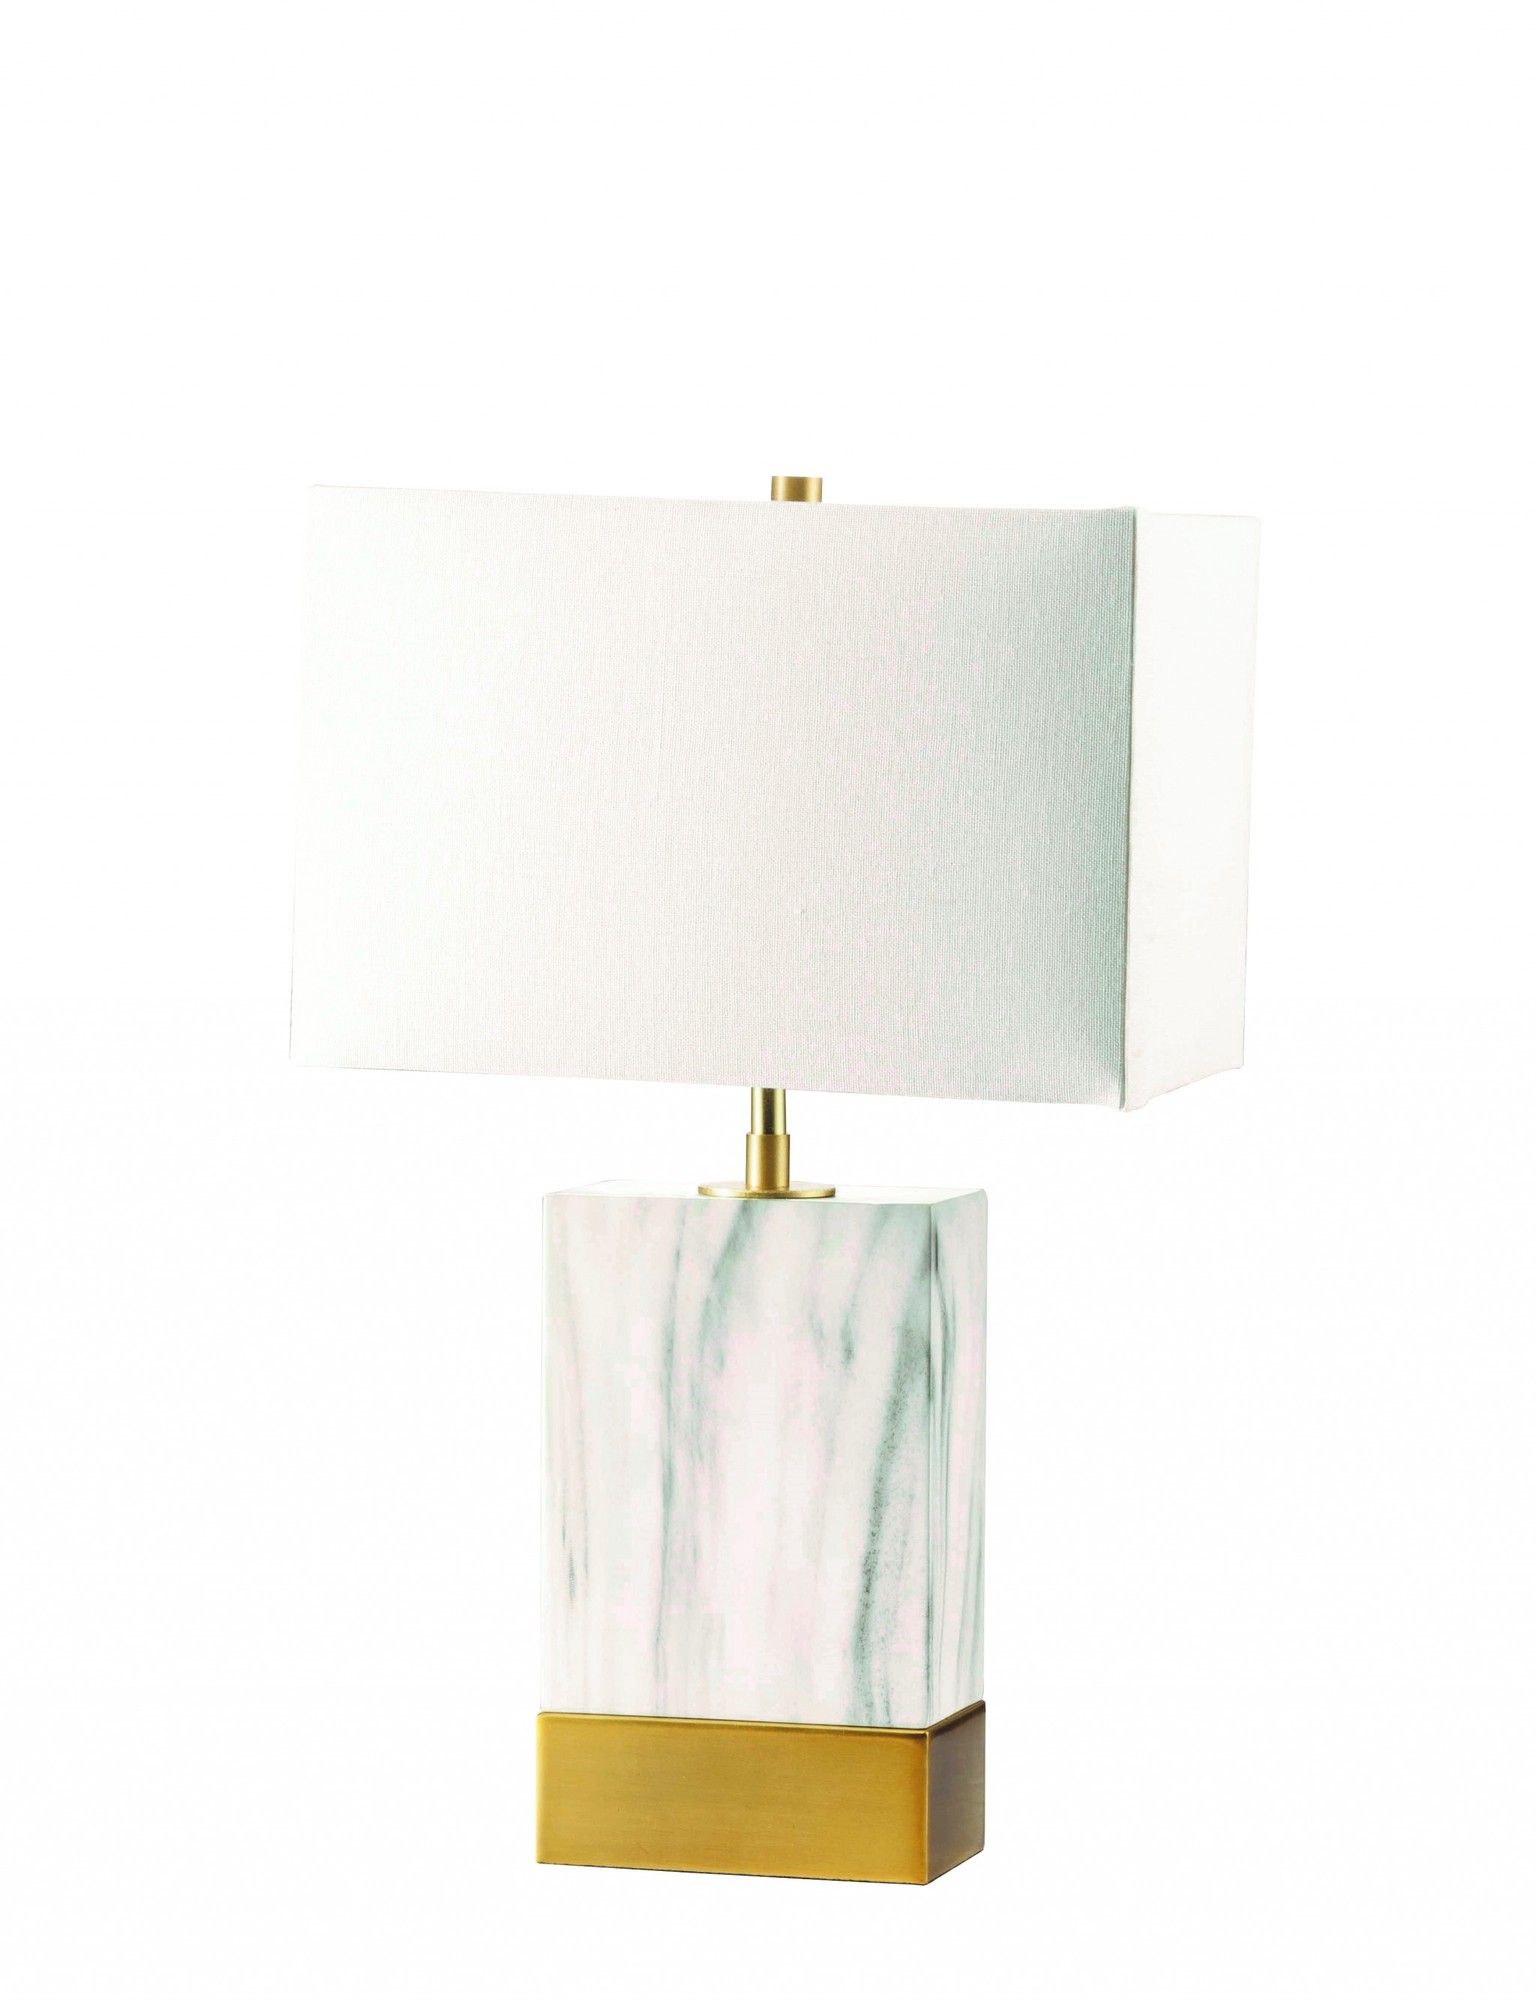 8" X 13" X 25" White & Satin Gold Metal Shade Table Lamp